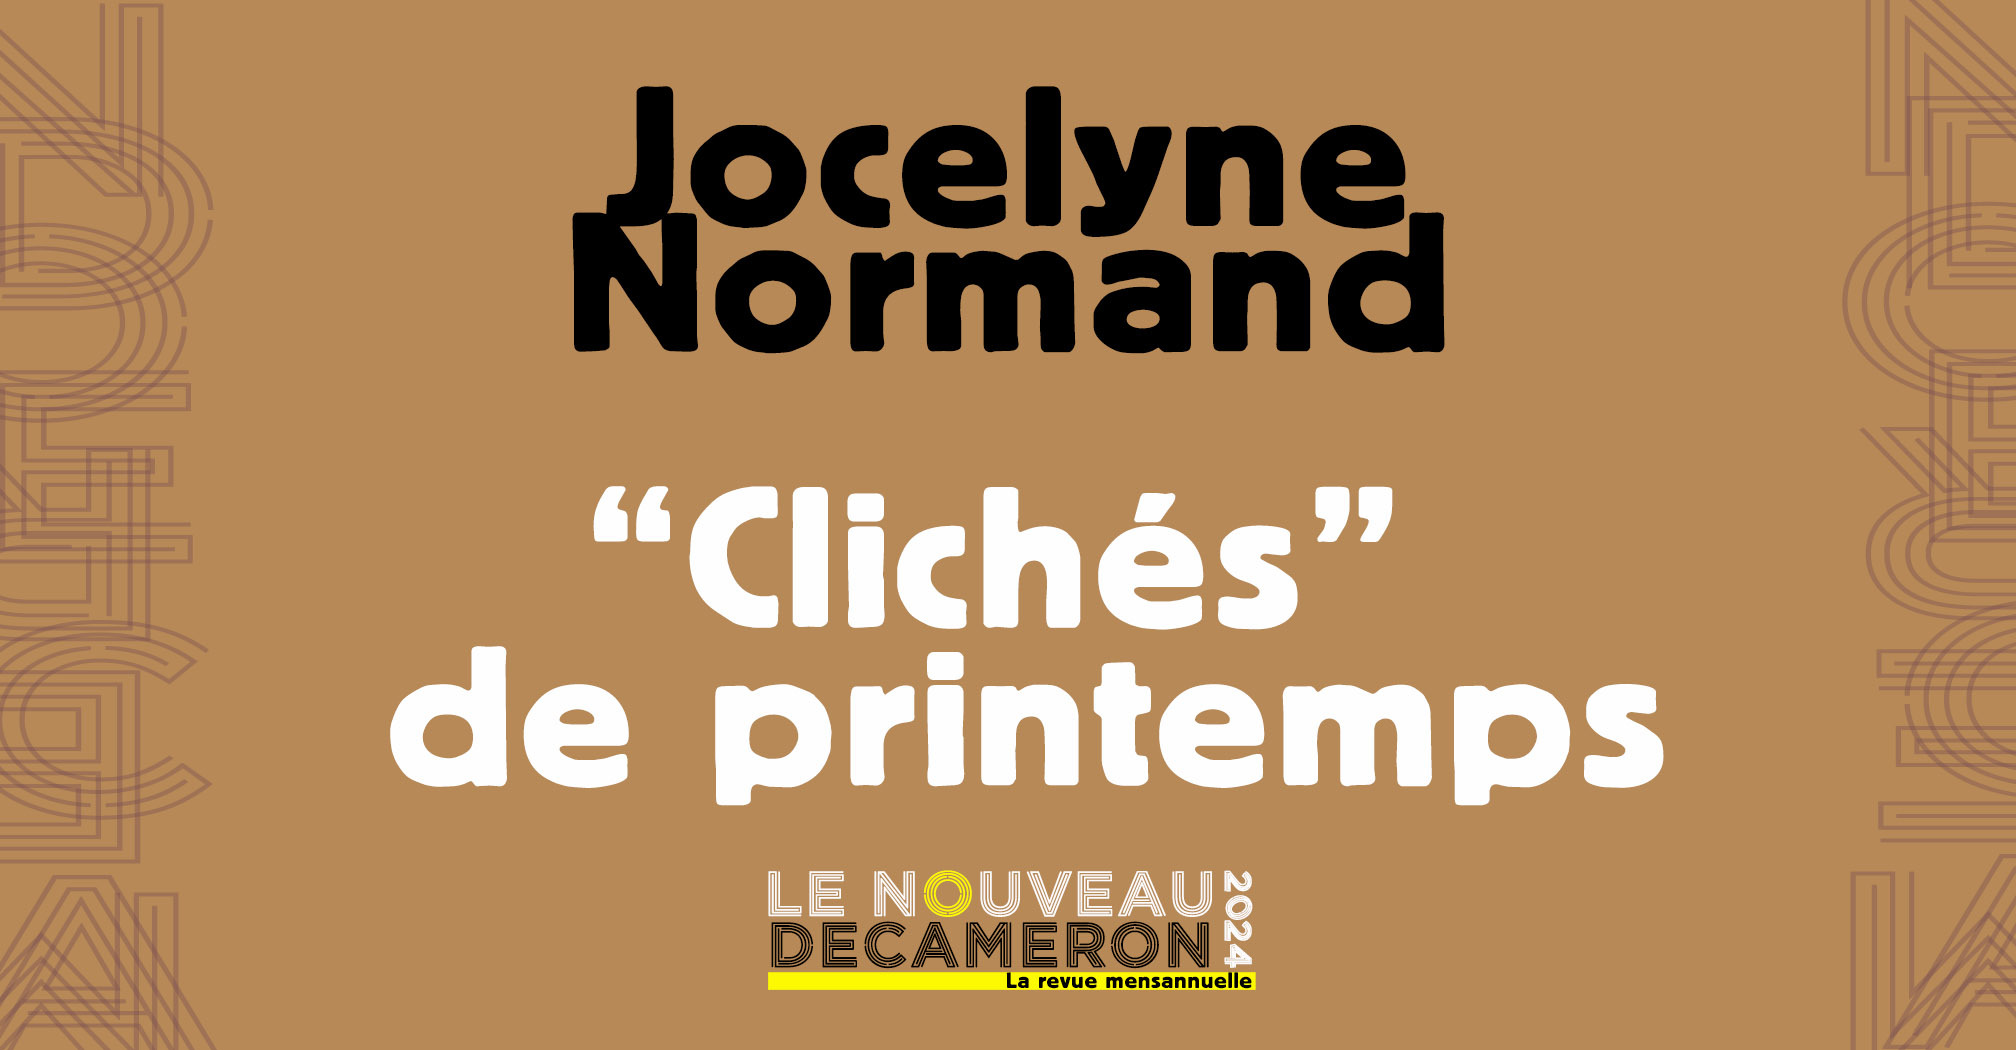 Jocelyne Normand - "Clichés" de printemps